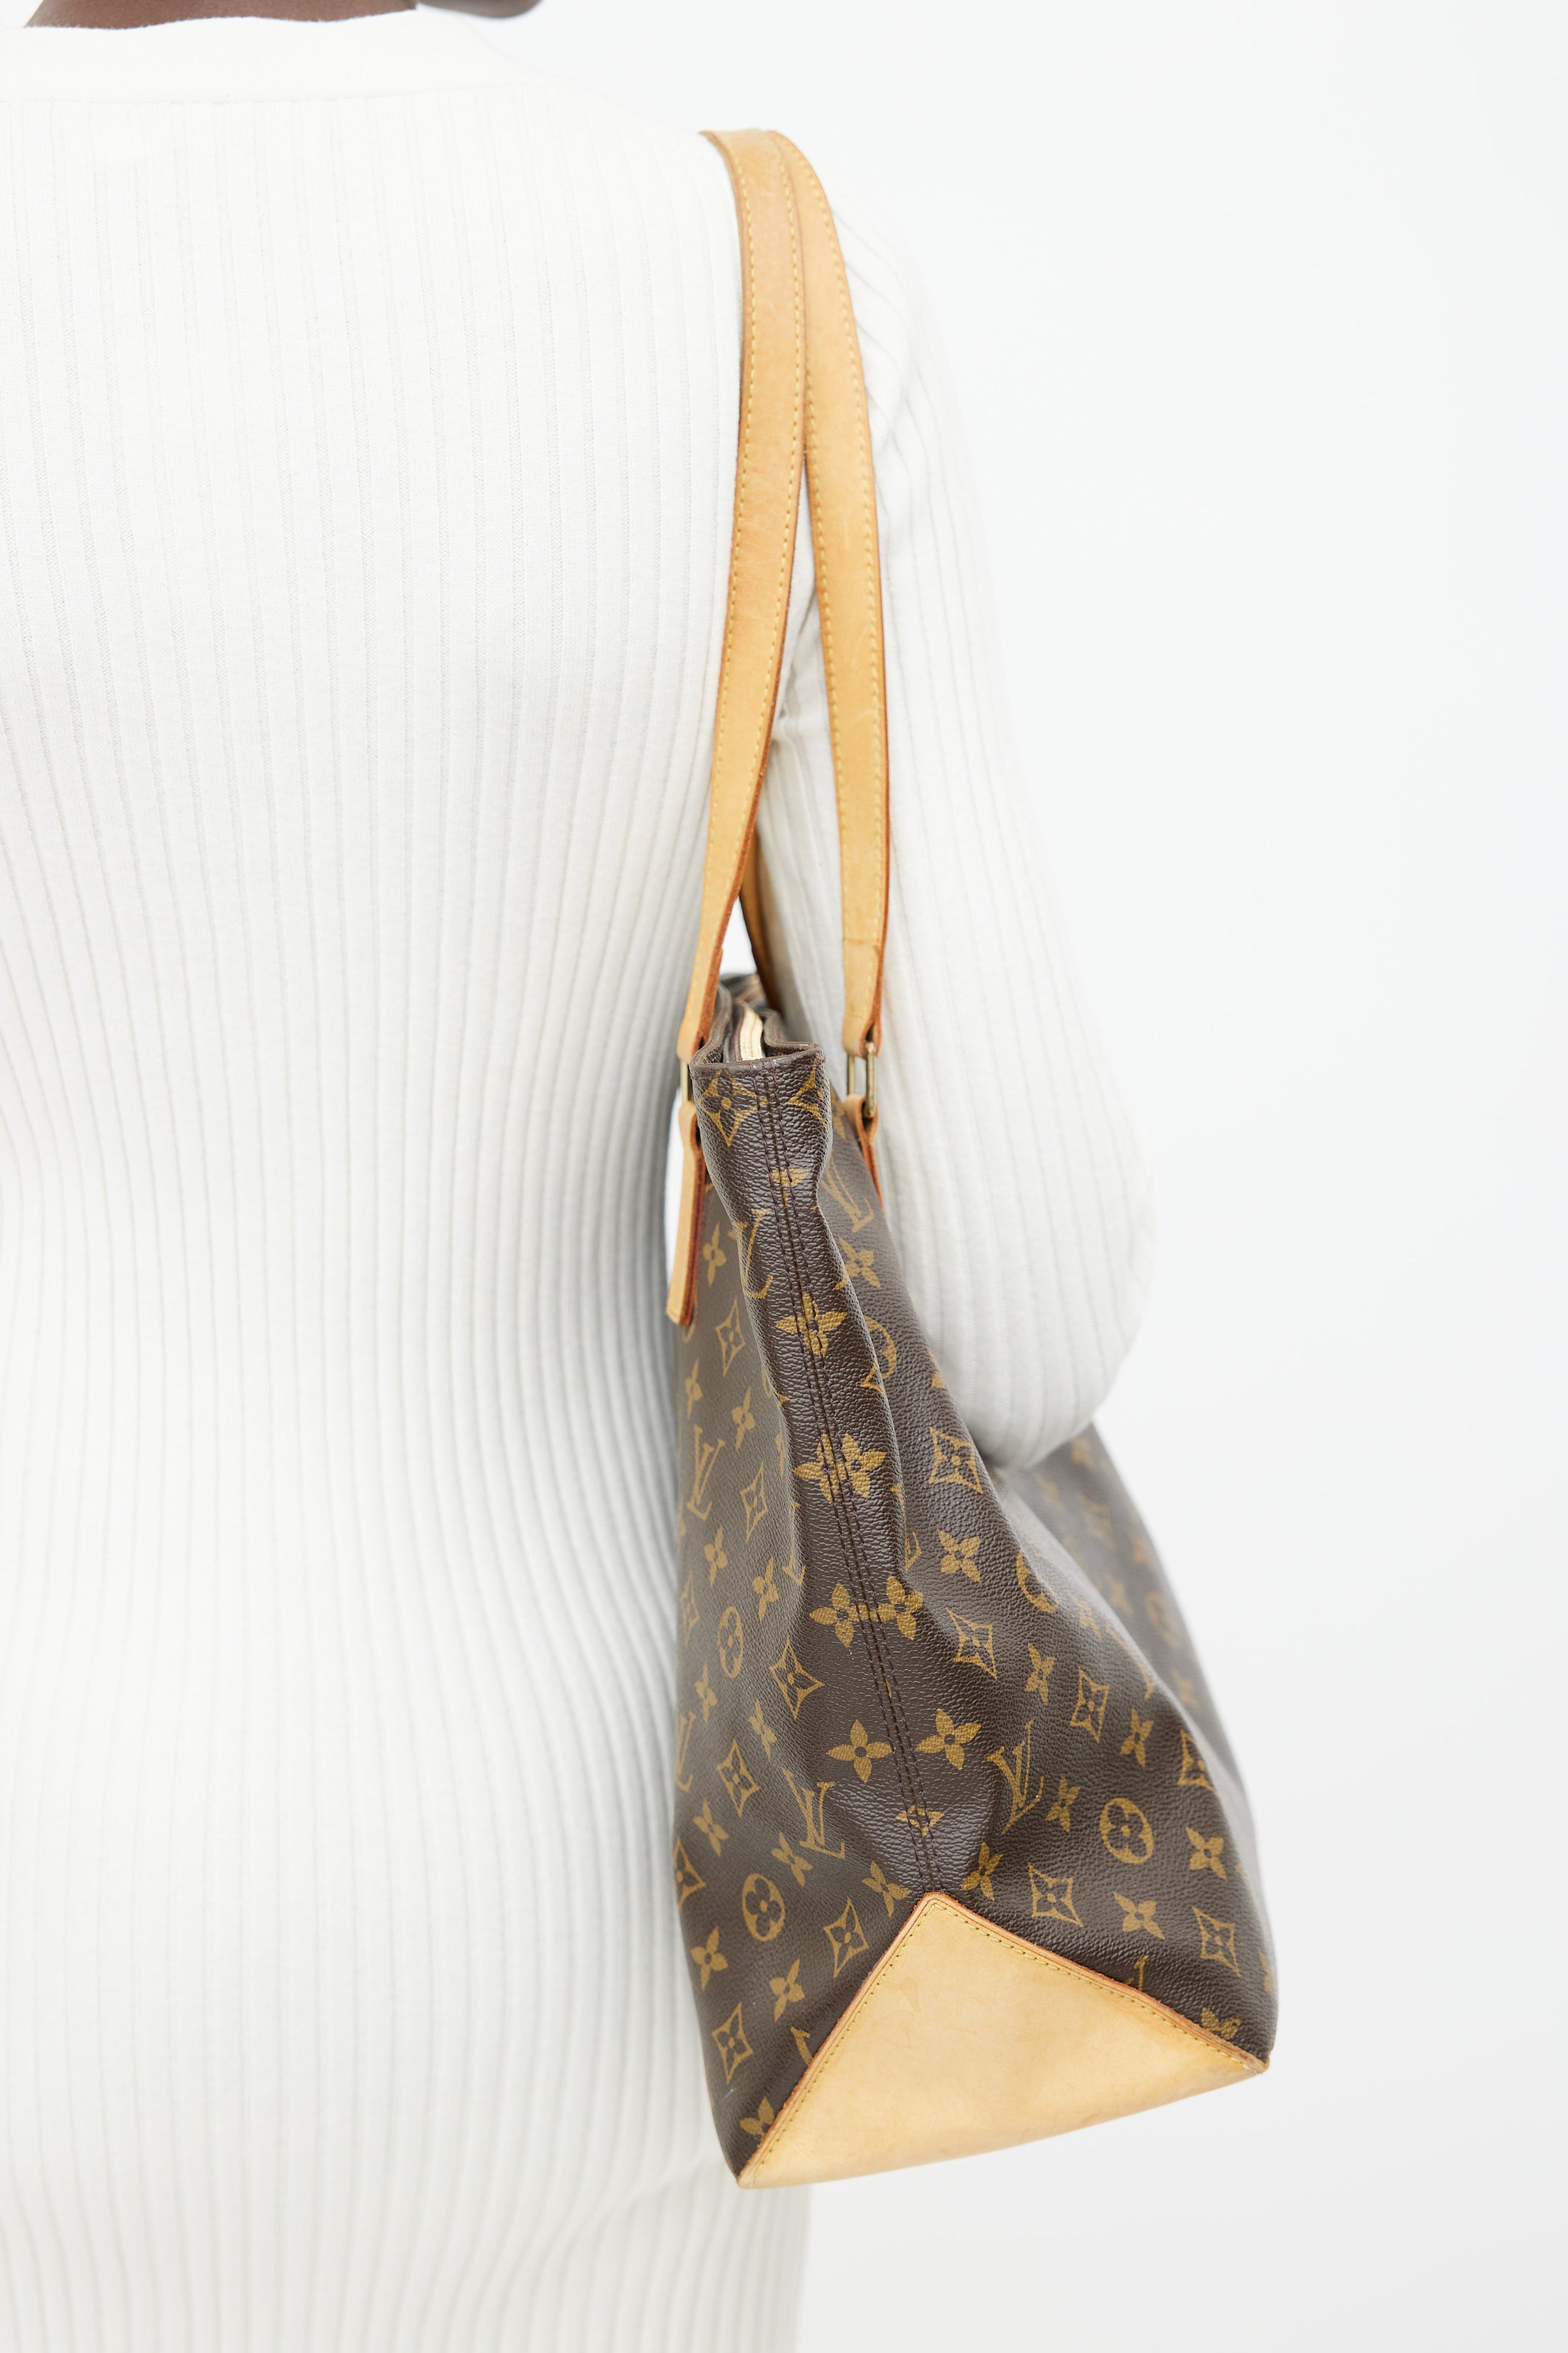 Louis Vuitton Cabas Mezzo Monogram Shoulder Bag for Sale in